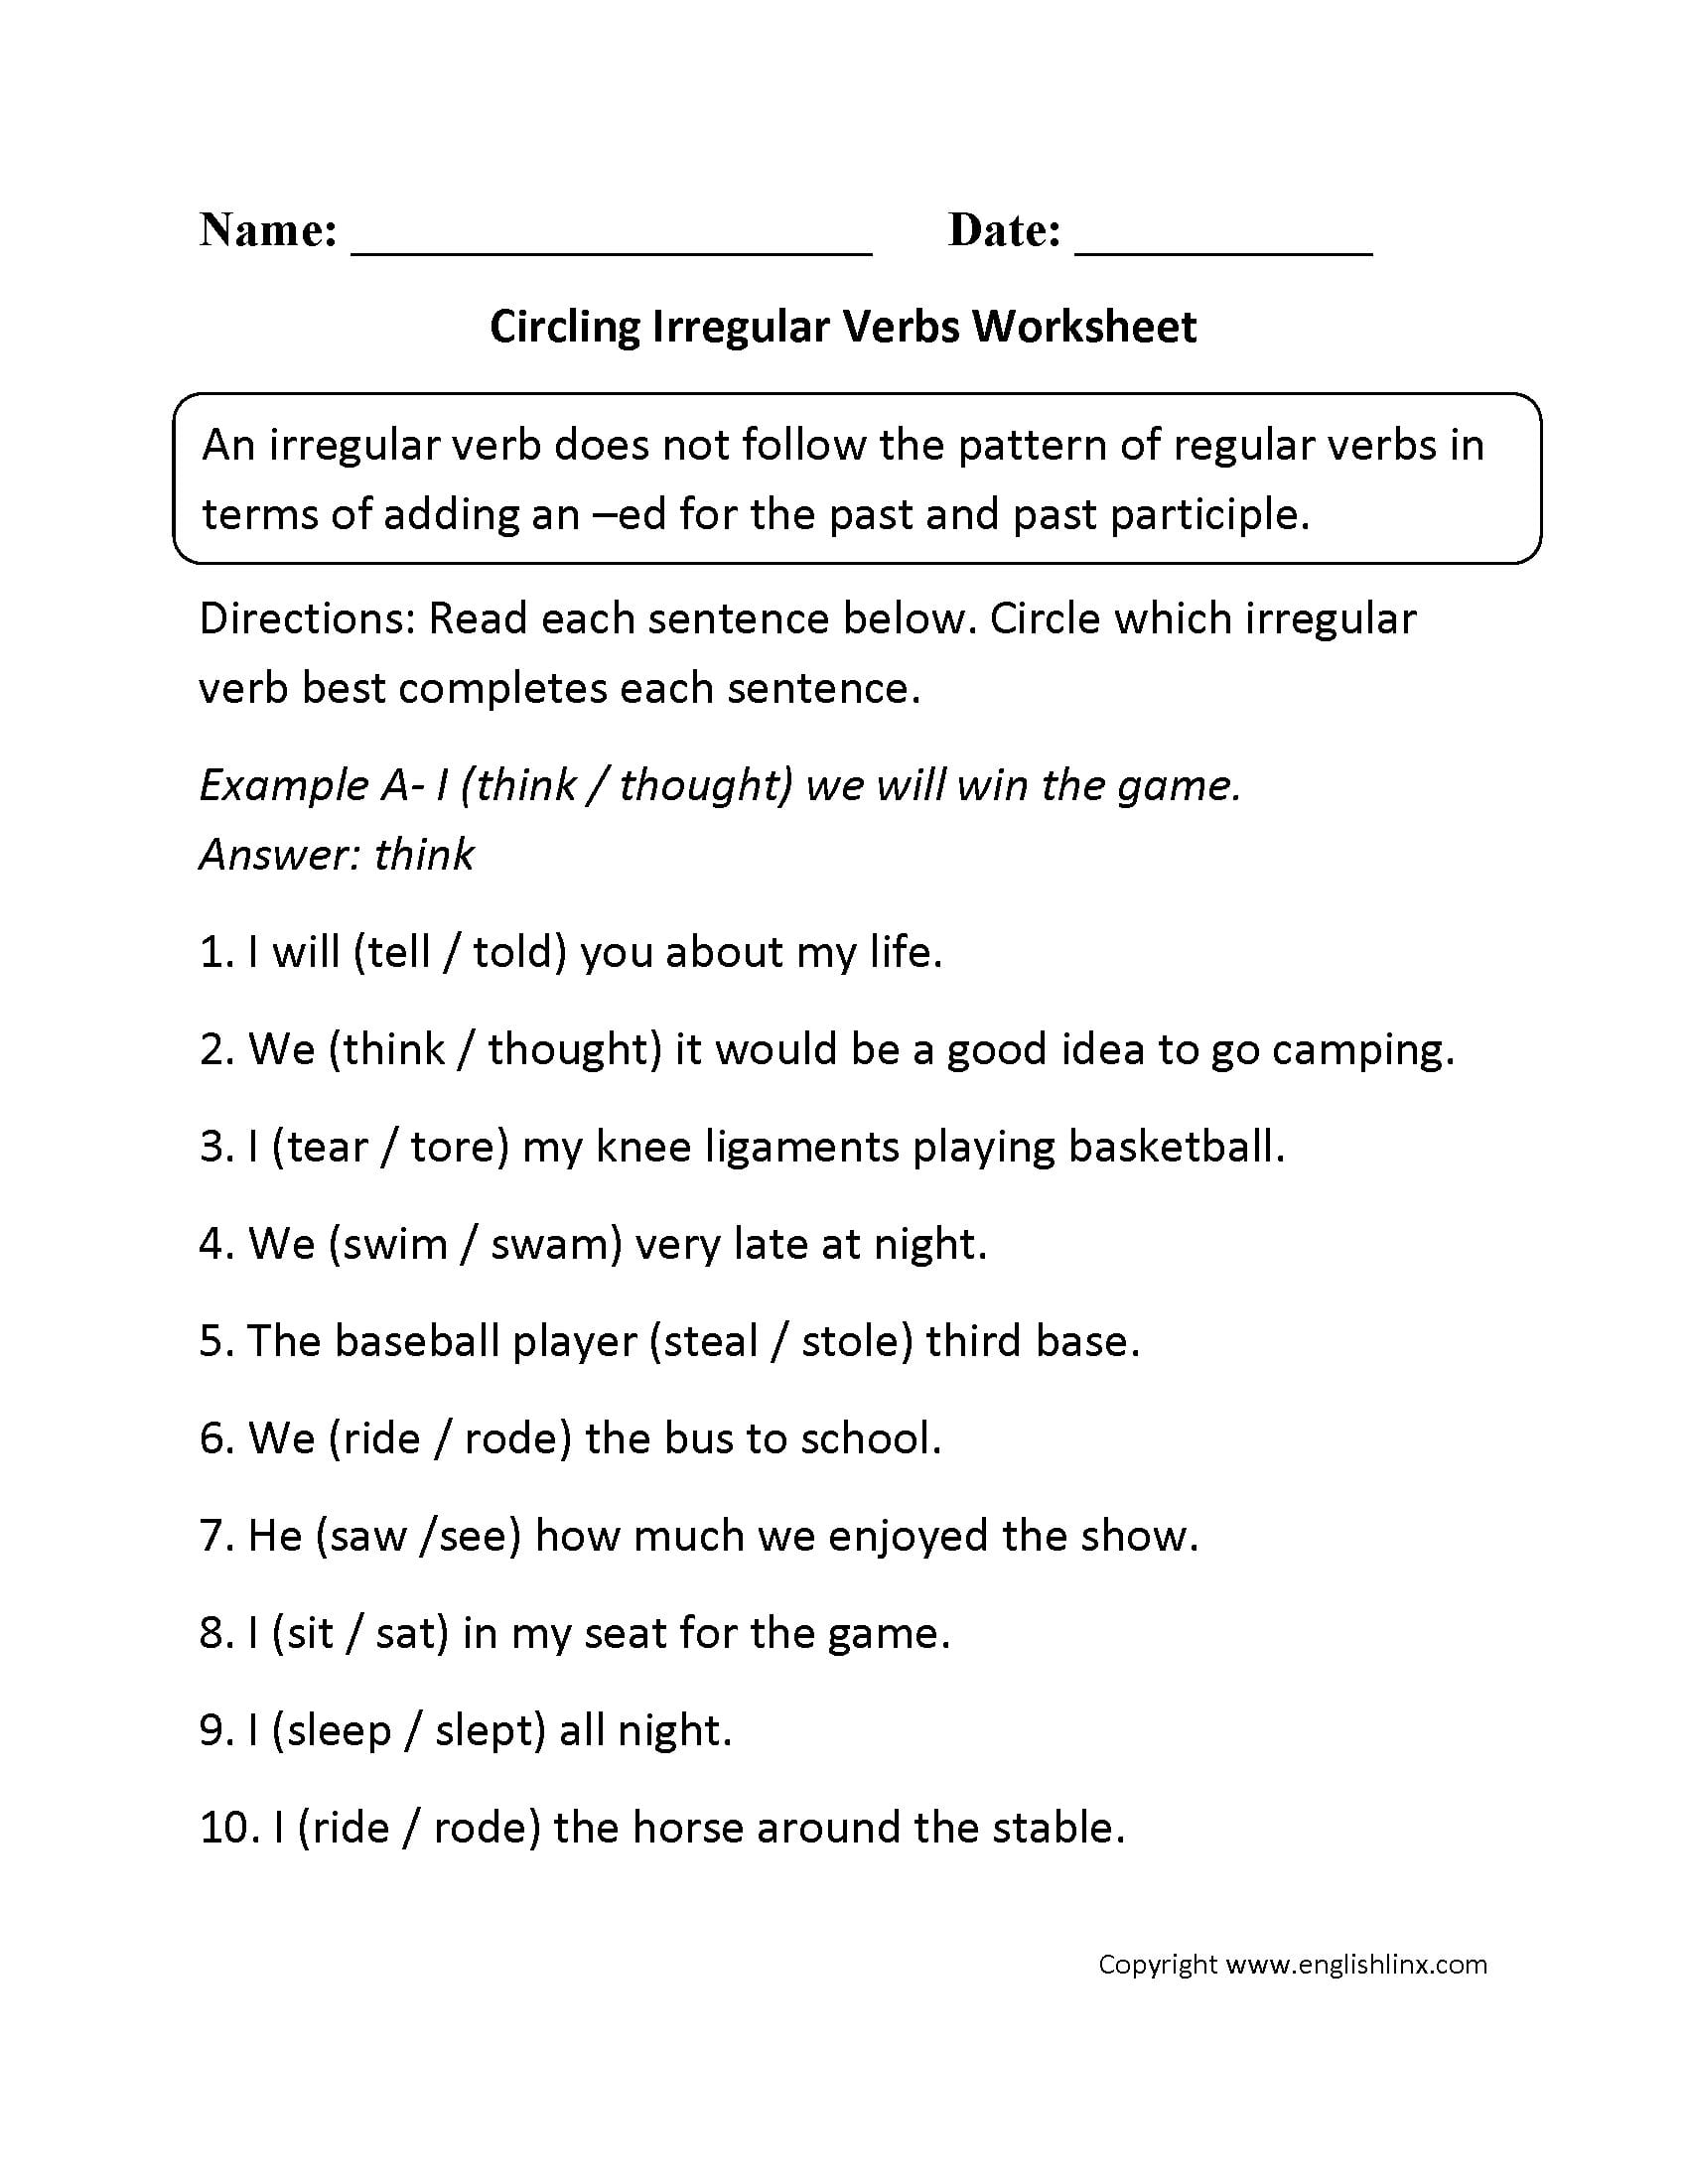 Verbs Worksheets  Irregular Verbs Worksheets Together With Regular Irregular Verbs Worksheet